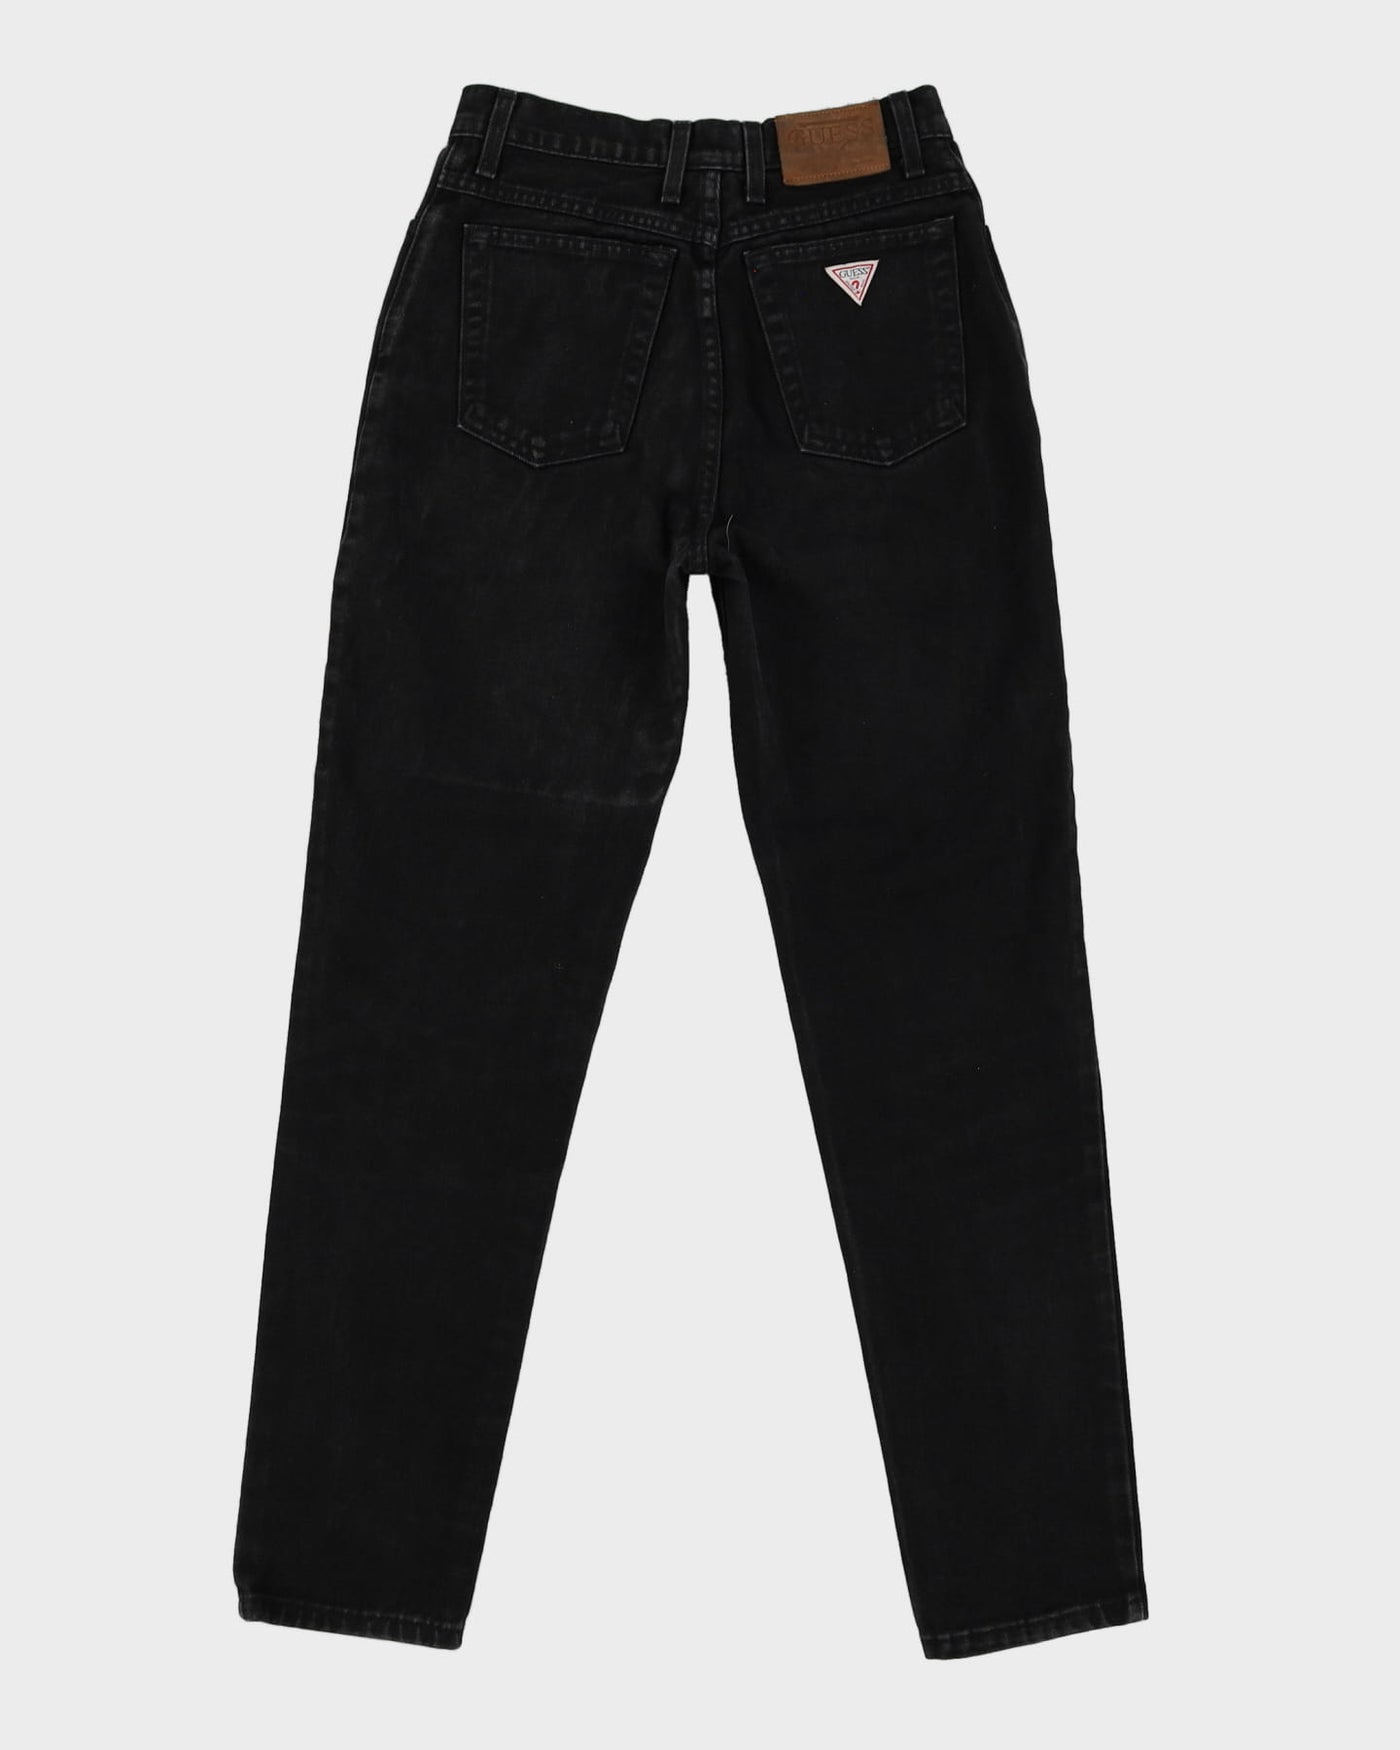 Vintage 90s Guess Black Dark Wash Jeans - W28 L30